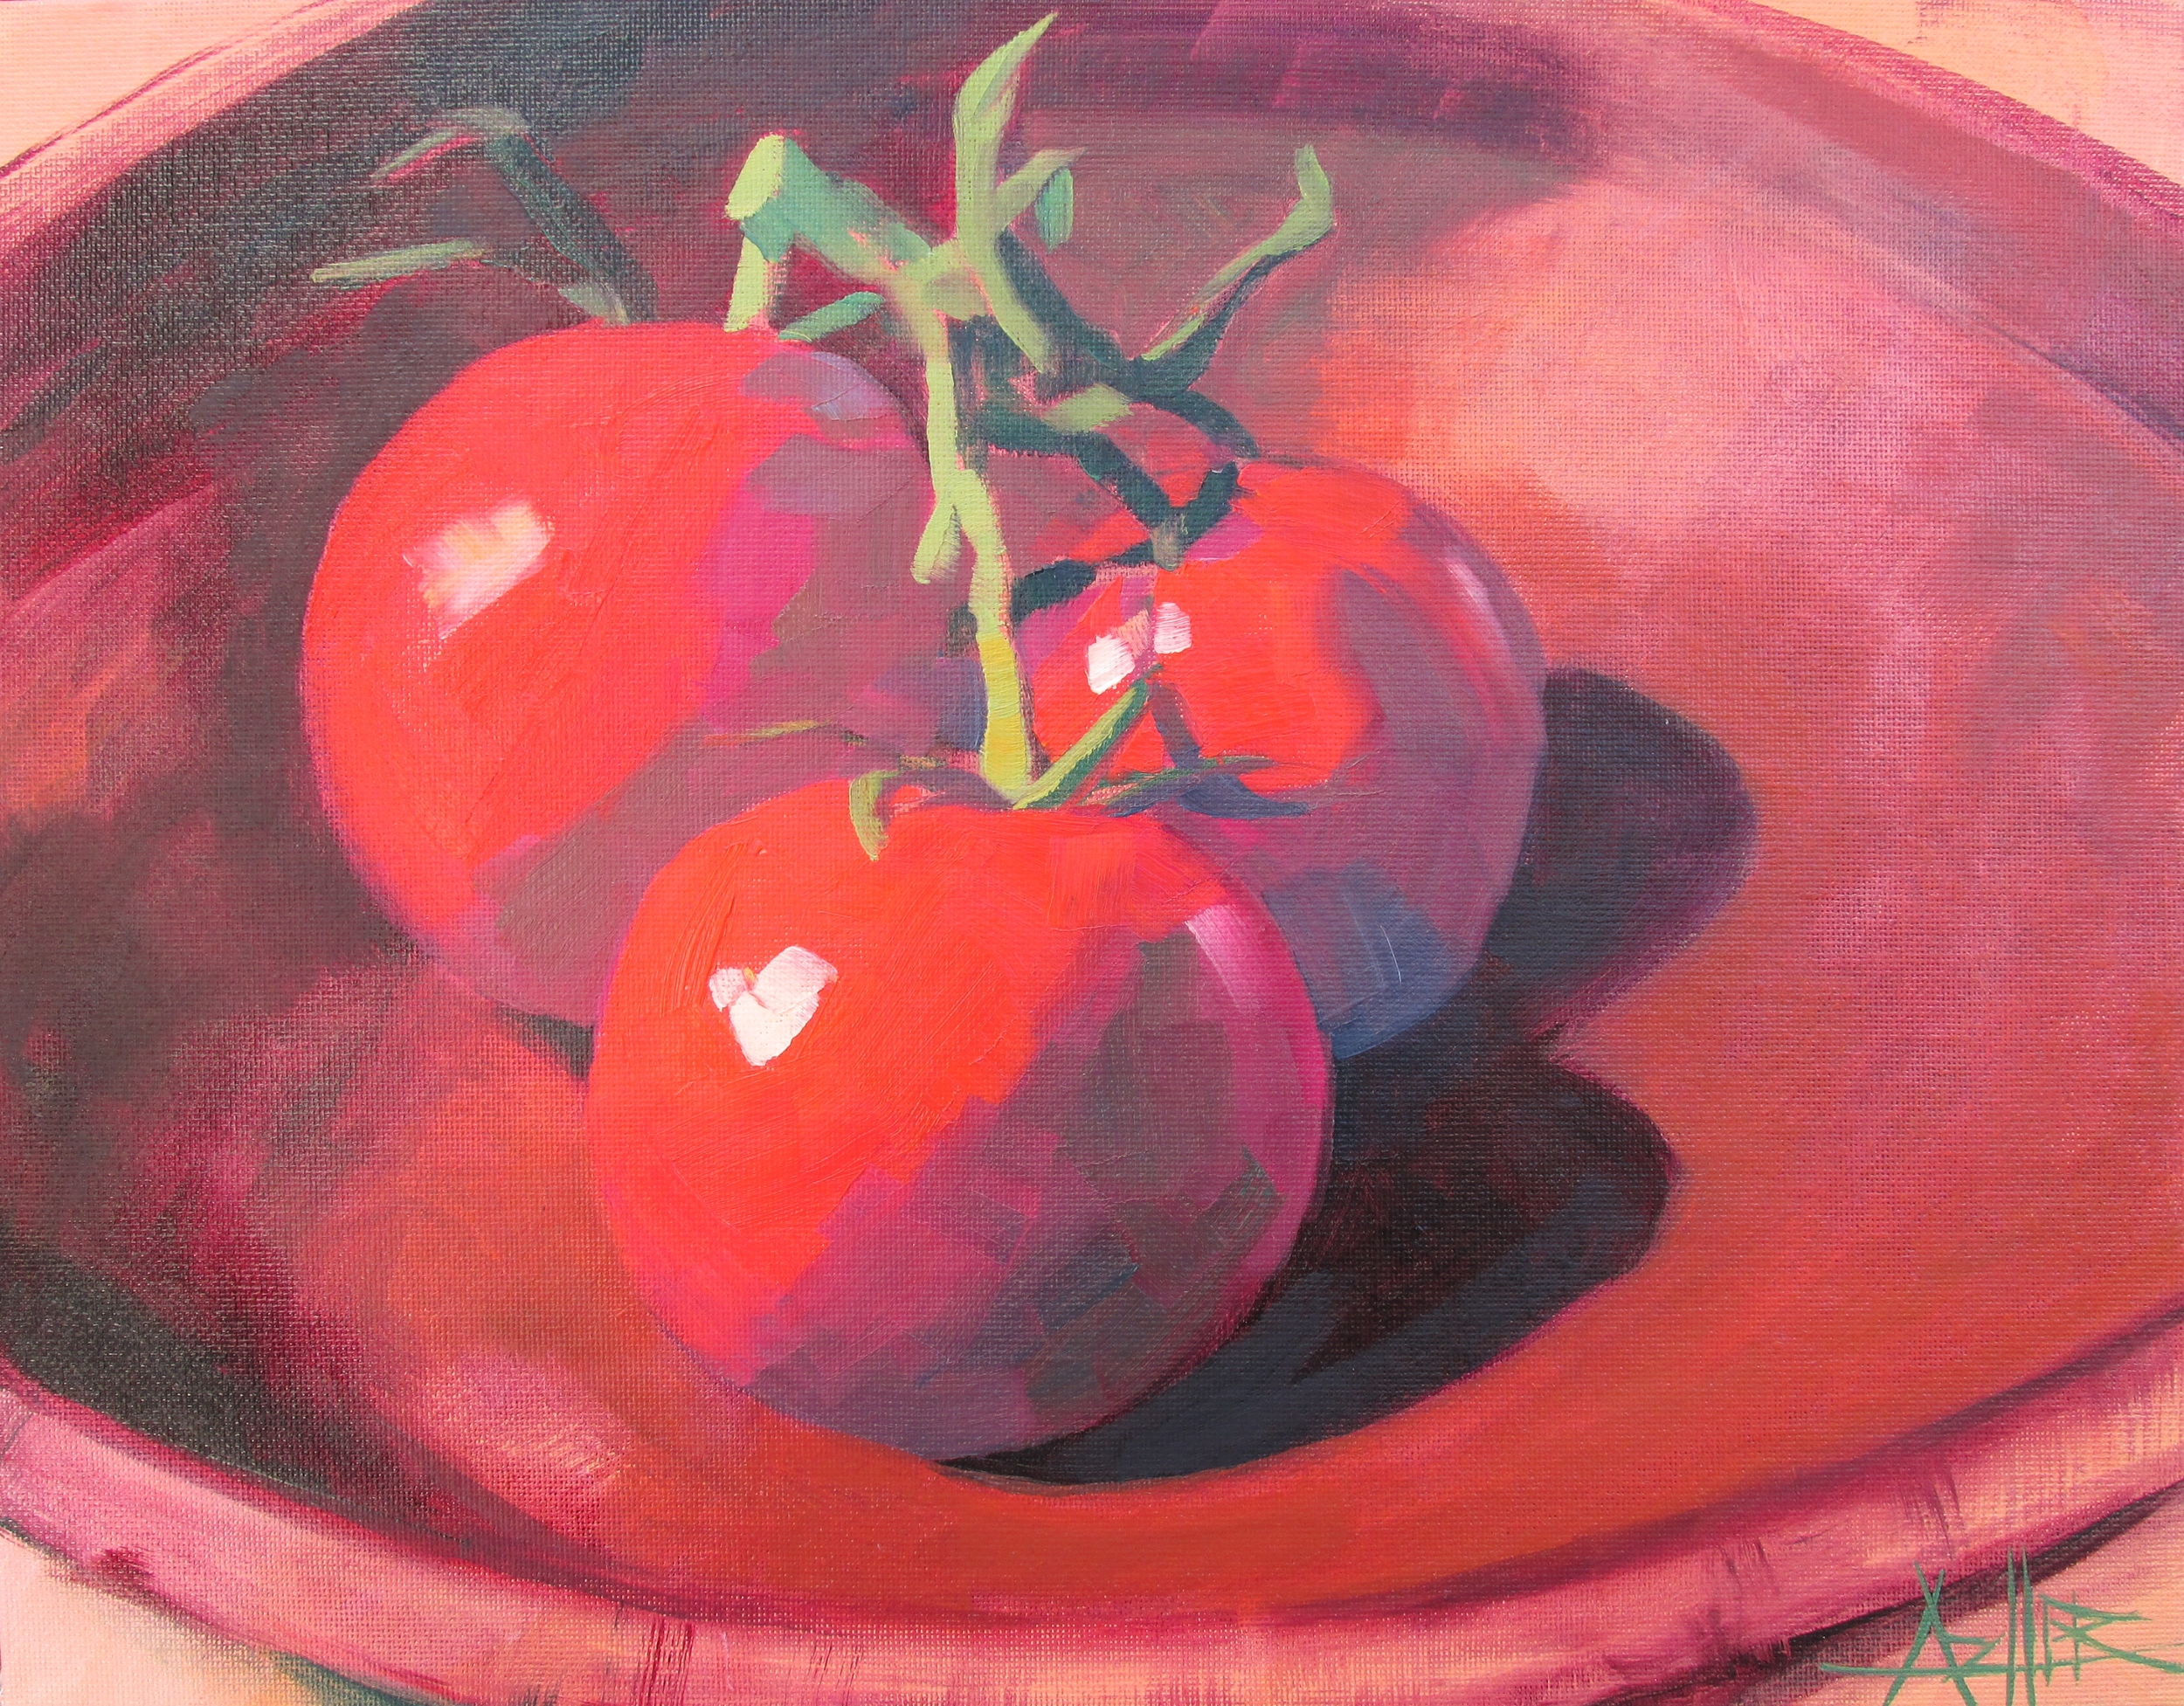 SOLD, Three Tomatoes, Copyright 2015 Hirschten, Oil on Canvas 11" x 14"